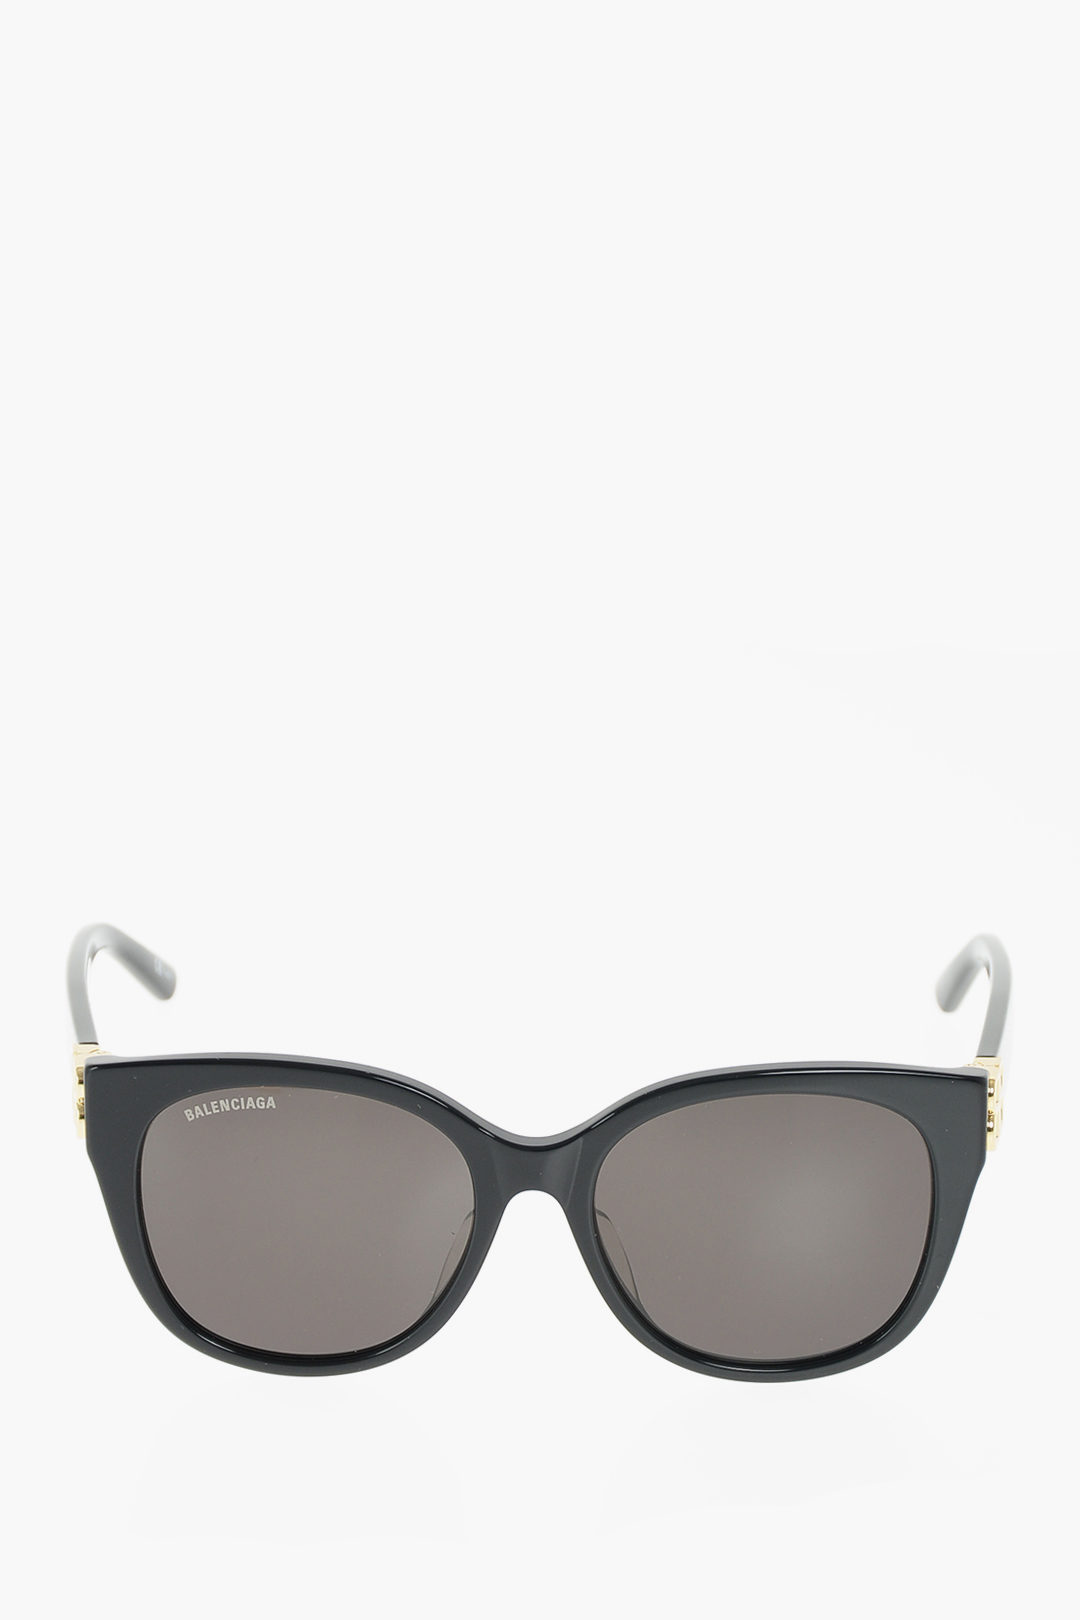 Rive Gauche wayfarer sunglasses Balenciaga  IetpShops Germany  curved  visor wayfarer sunglasses